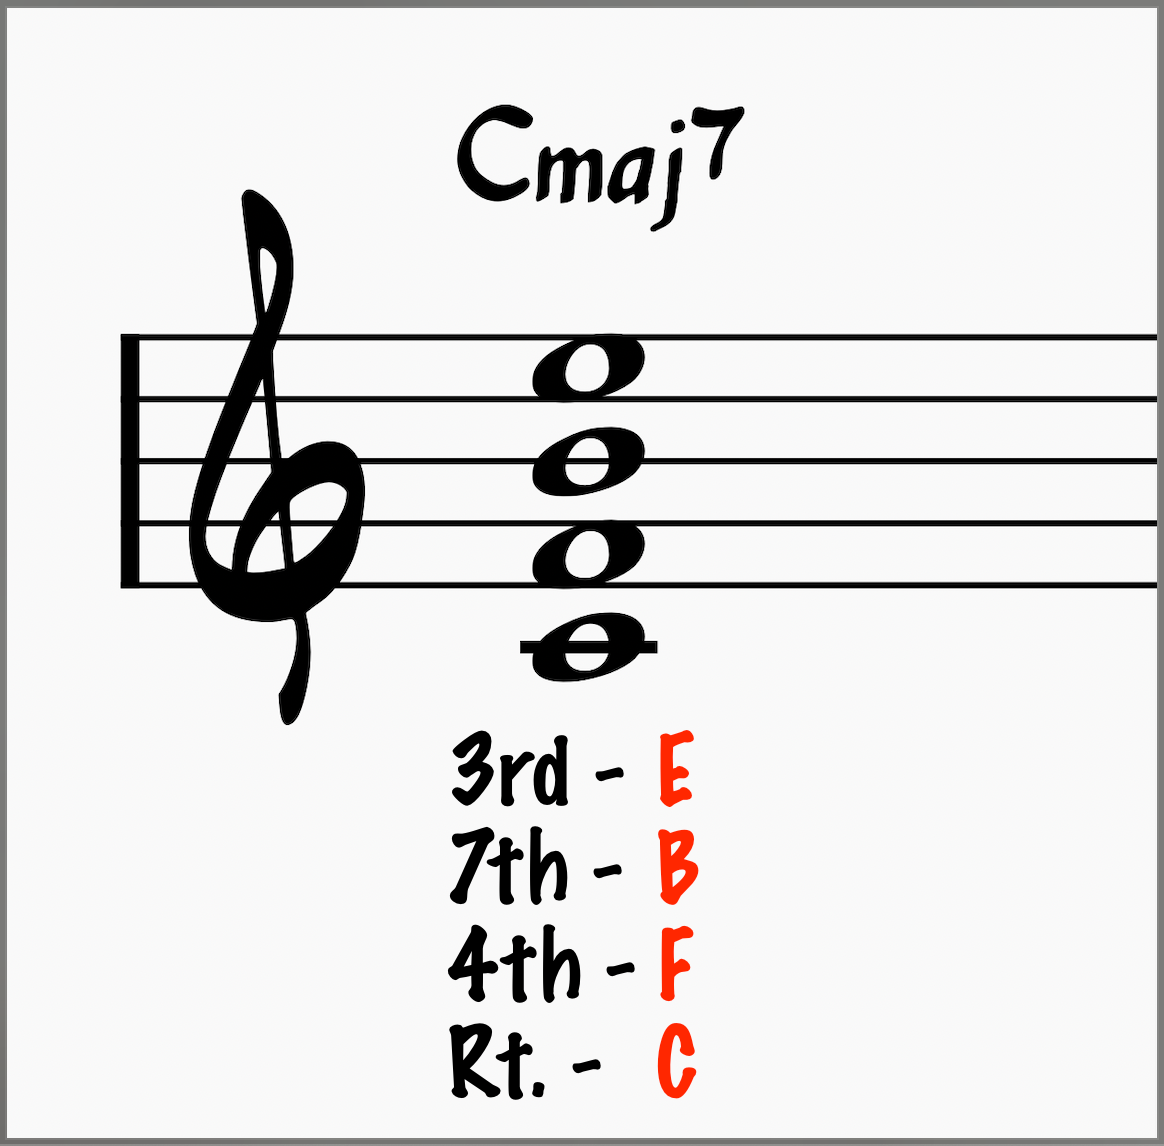 Quartal Chord built from C, F, B, E